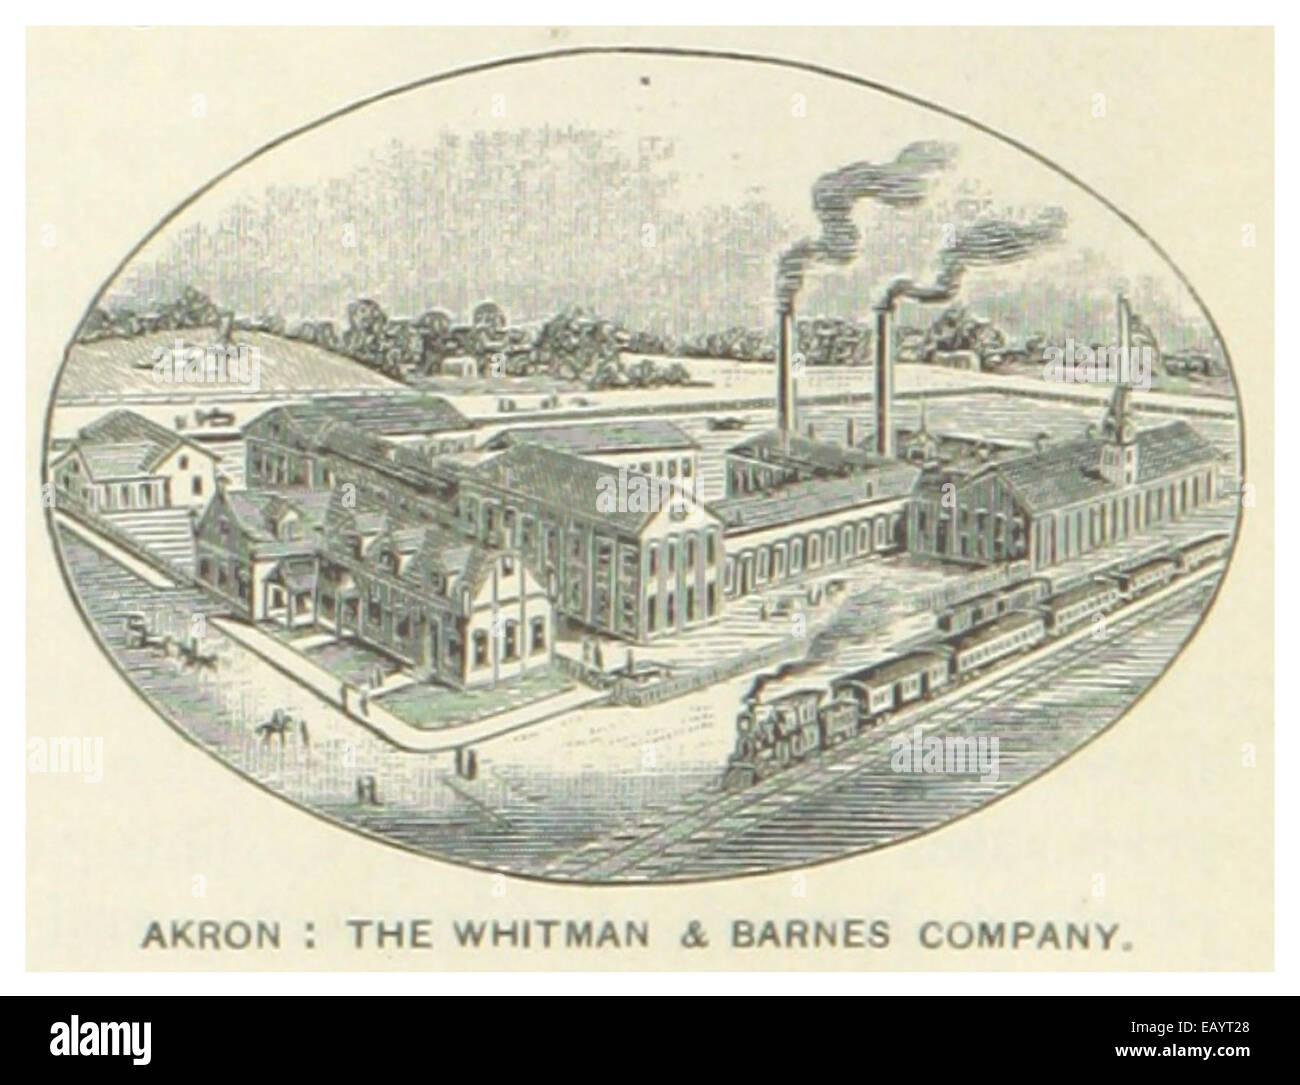 US-OH(1891) p692 AKRON, THE WHITMAN & BARNES COMPANY Stock Photo